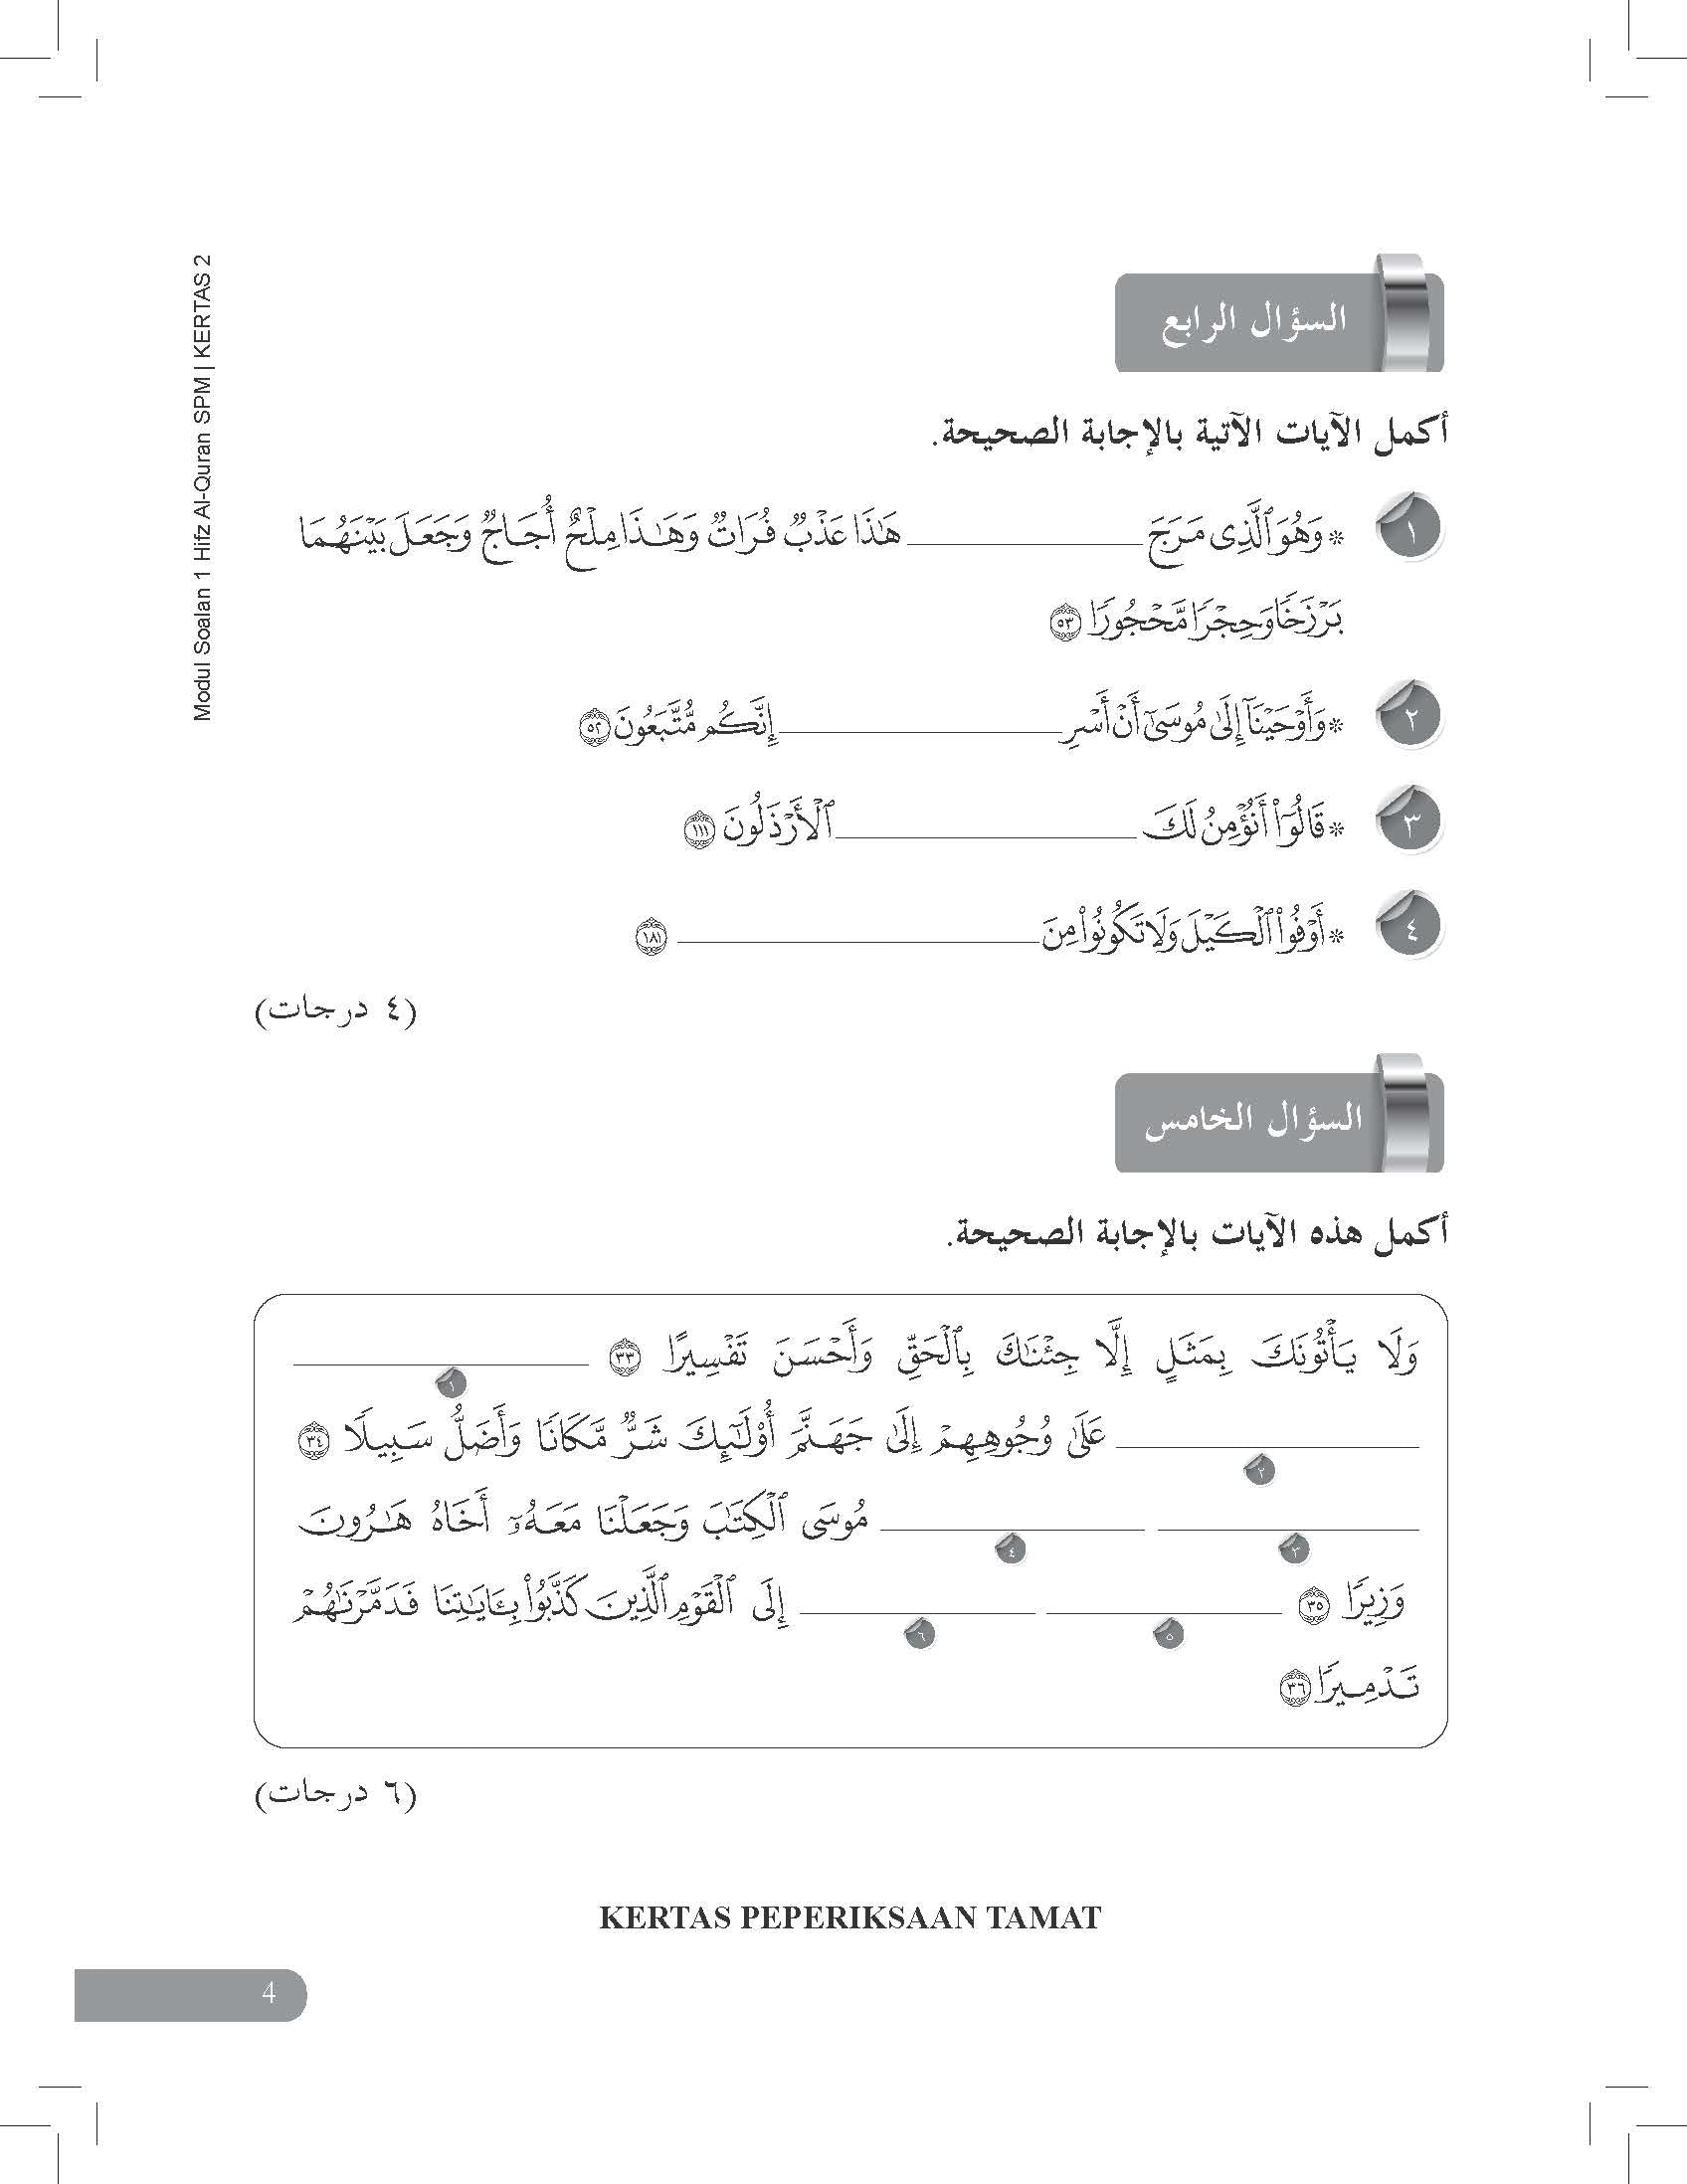 Skor Mumtaz - Modul Soalan Hifz Al-Quran SPM Kertas 2 - (TBBS1320)